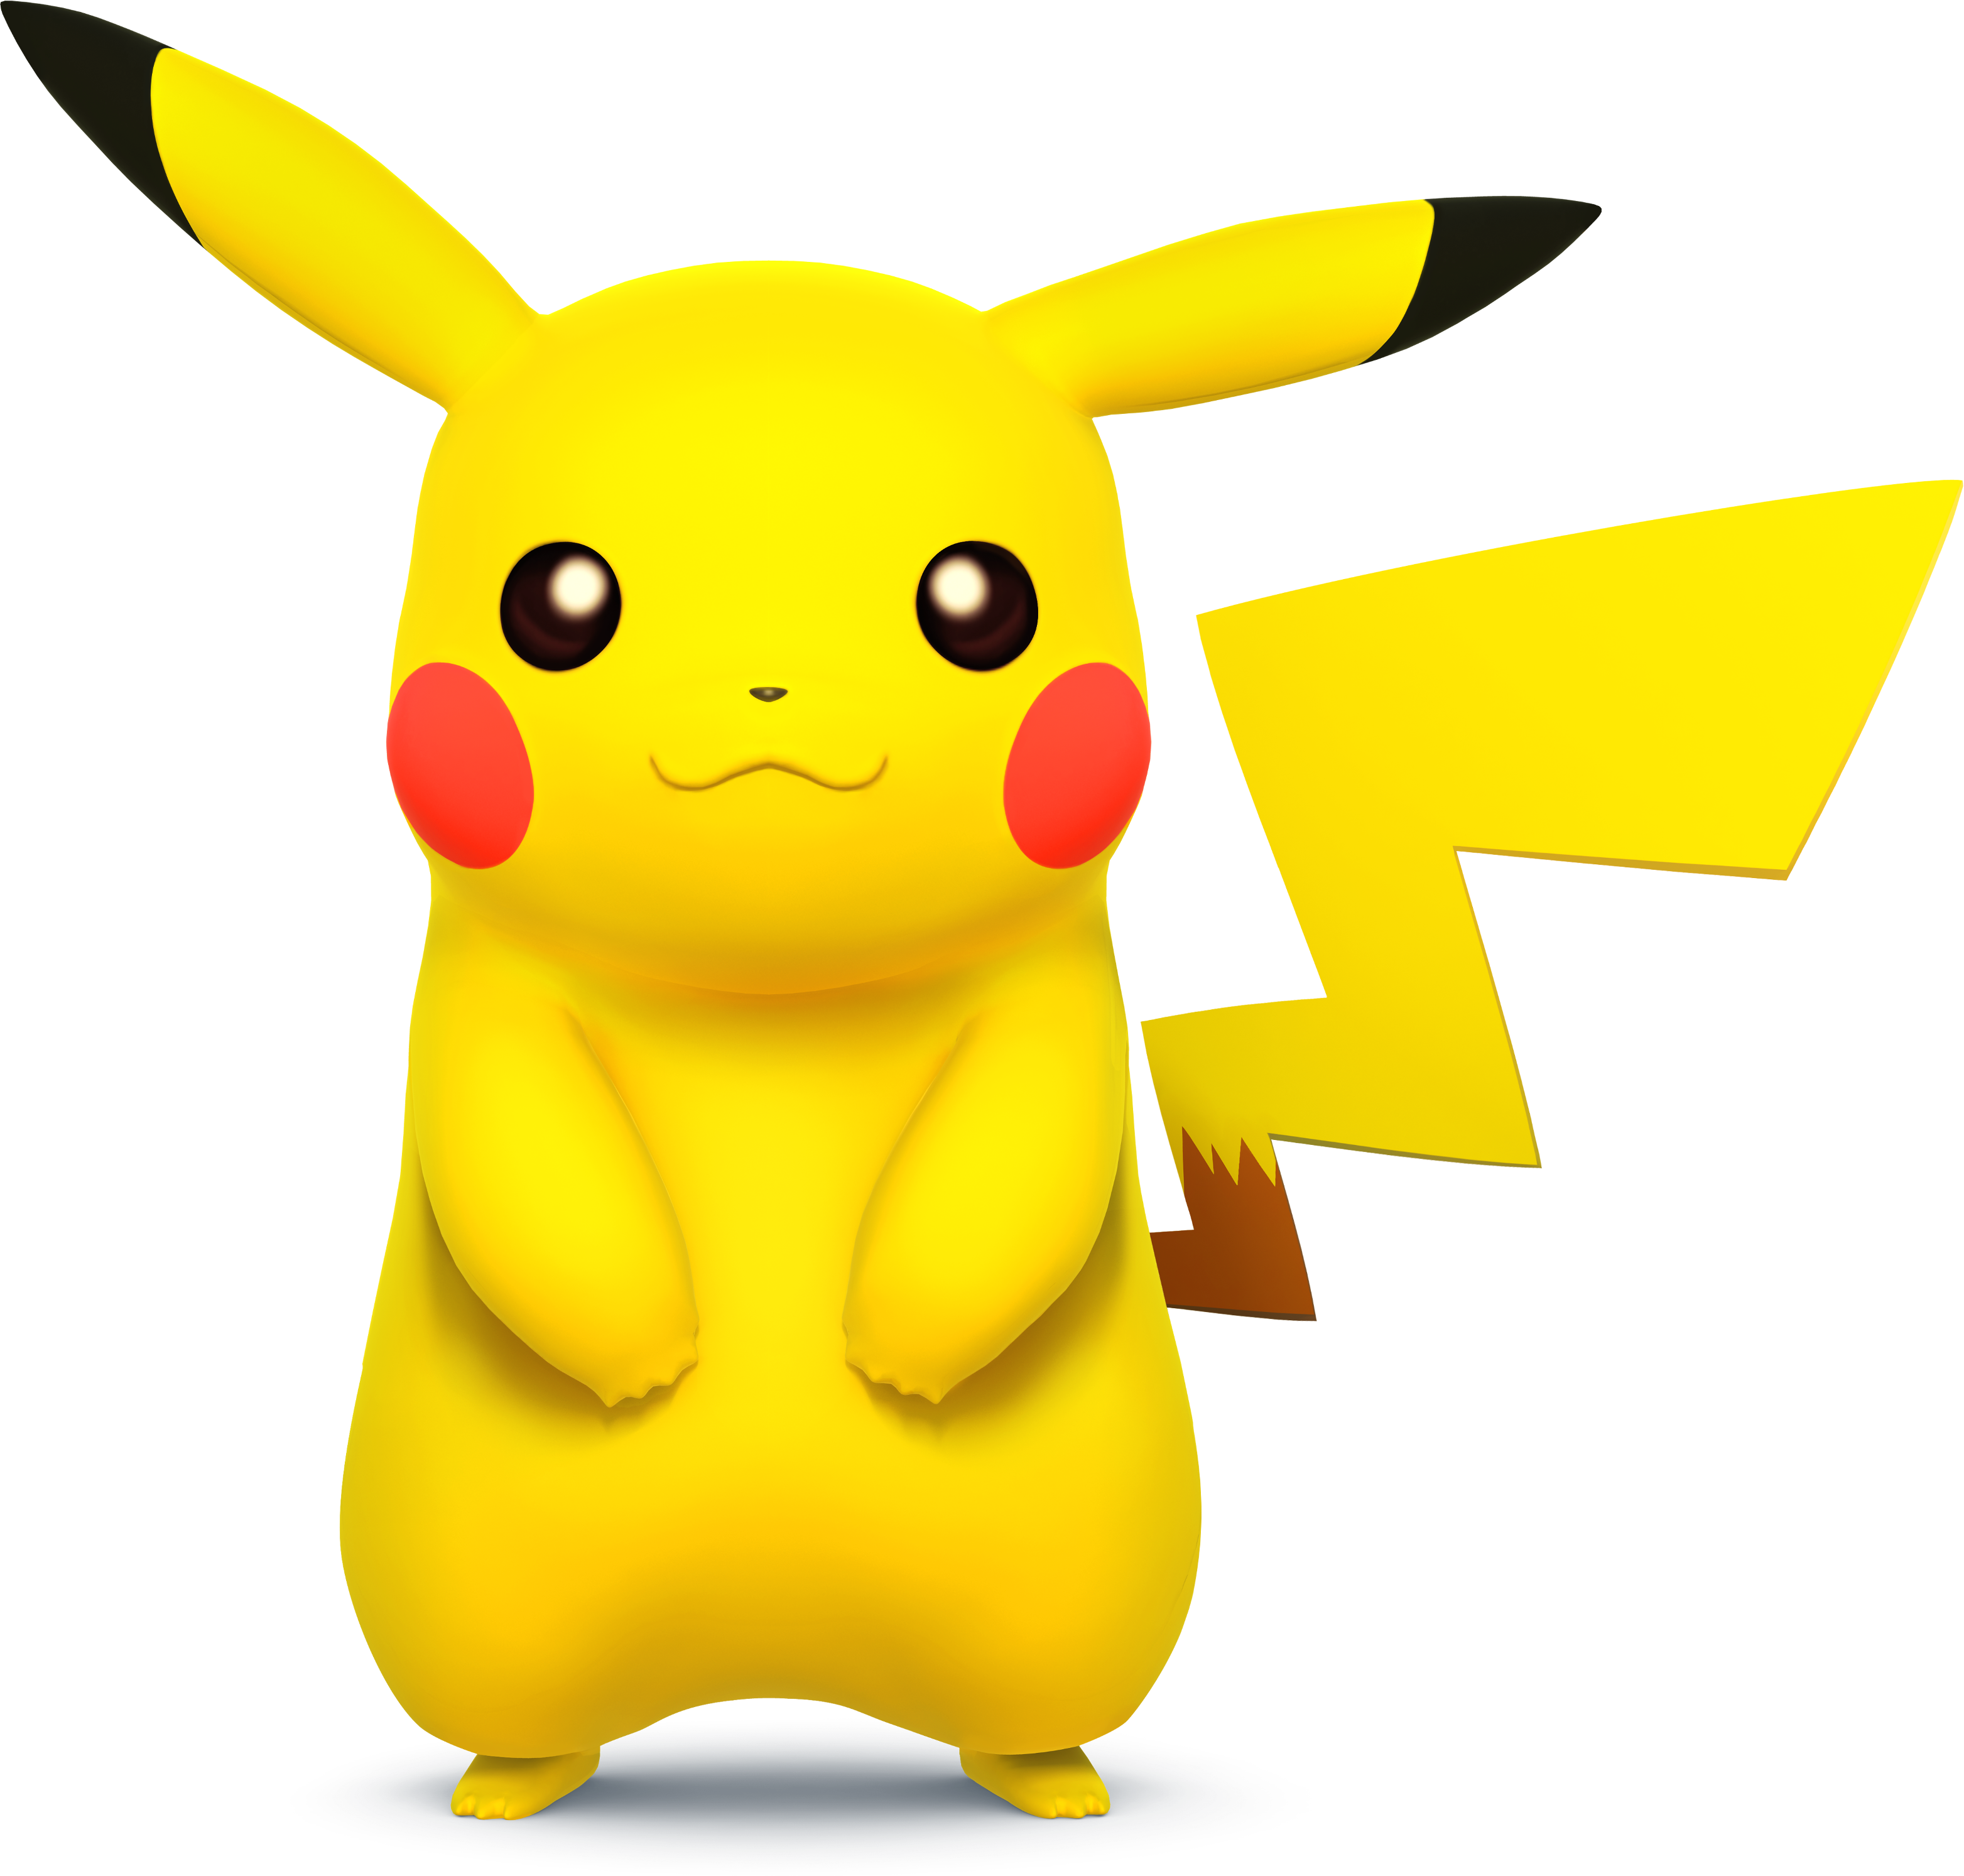 Pikachu the popular Pokemon |